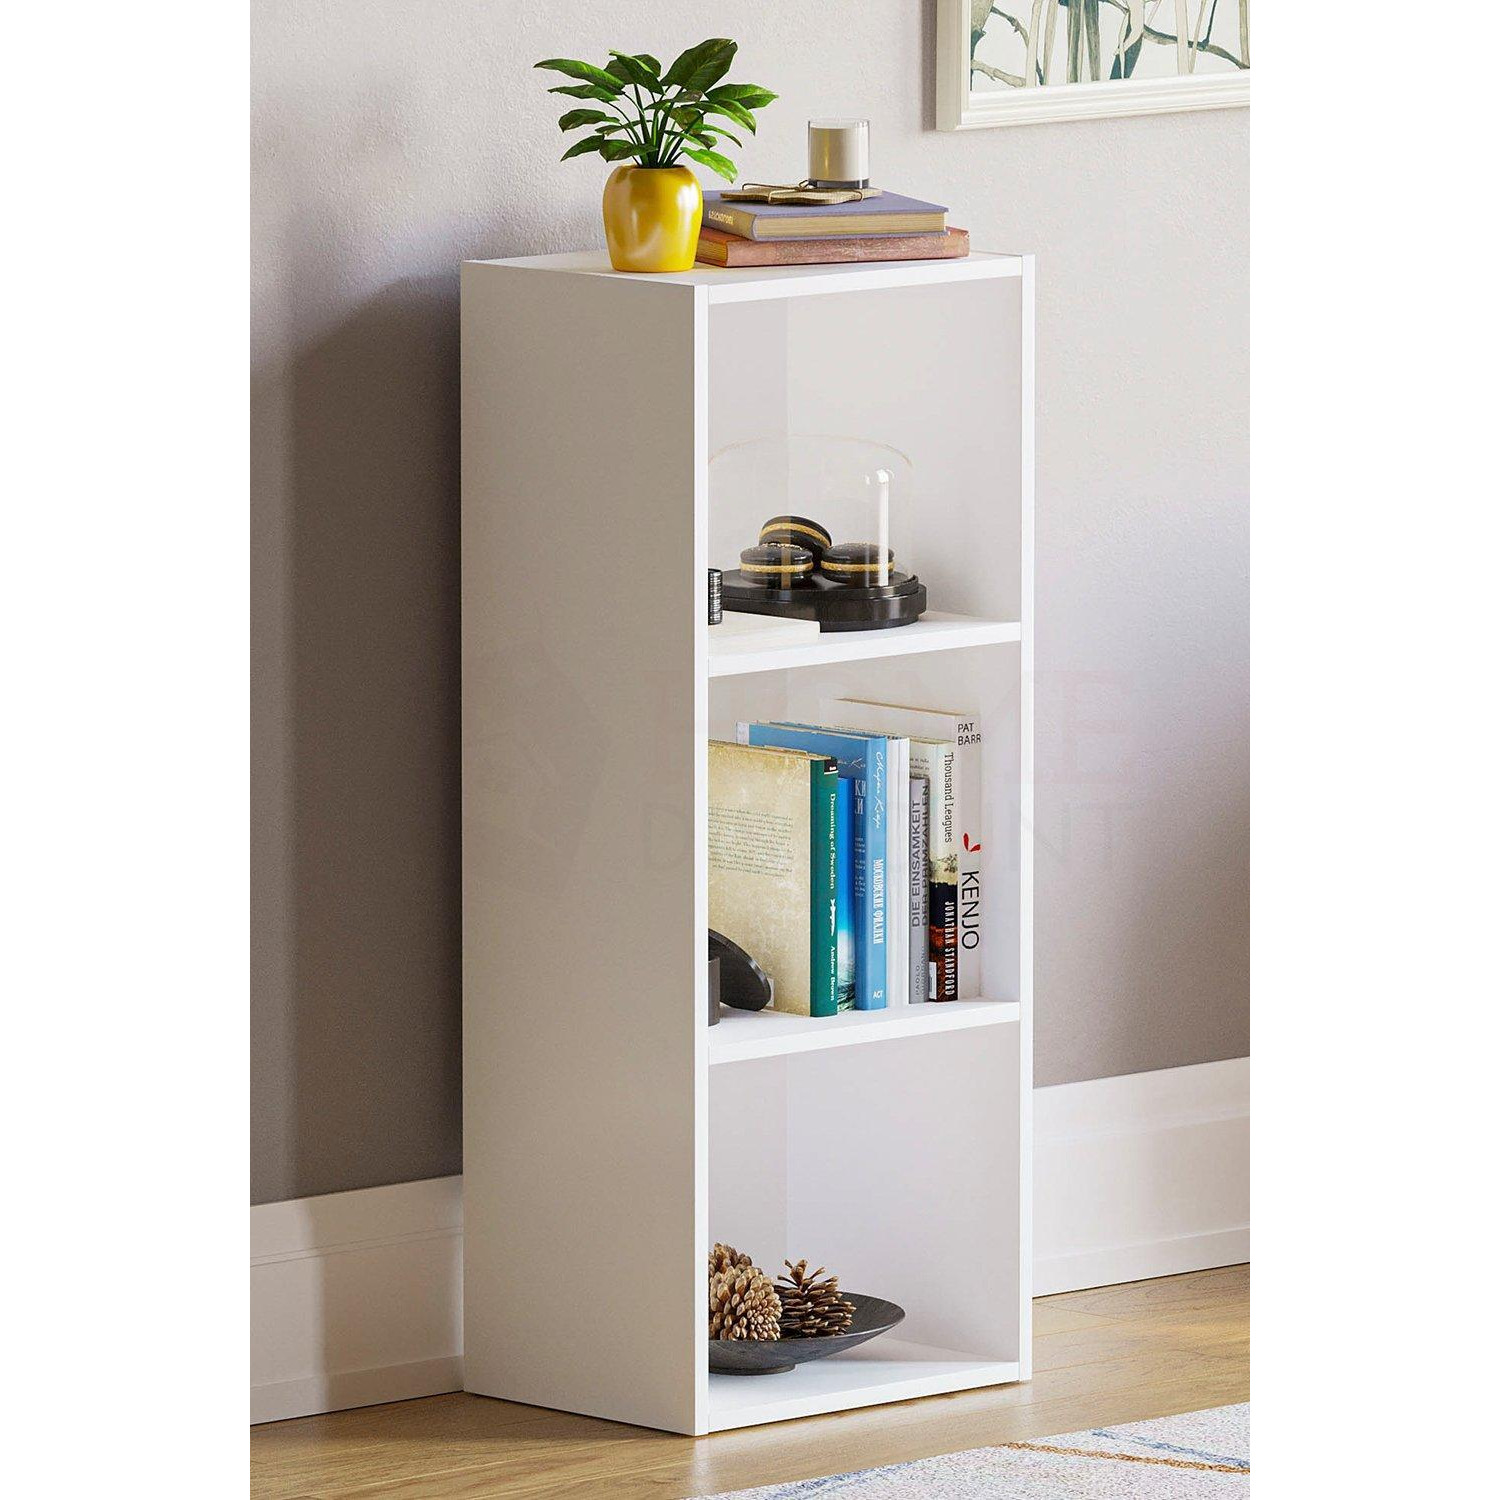 Vida Designs Oxford 3 Tier Cube Bookcase Storage 800 x 320 x 240 mm - image 1